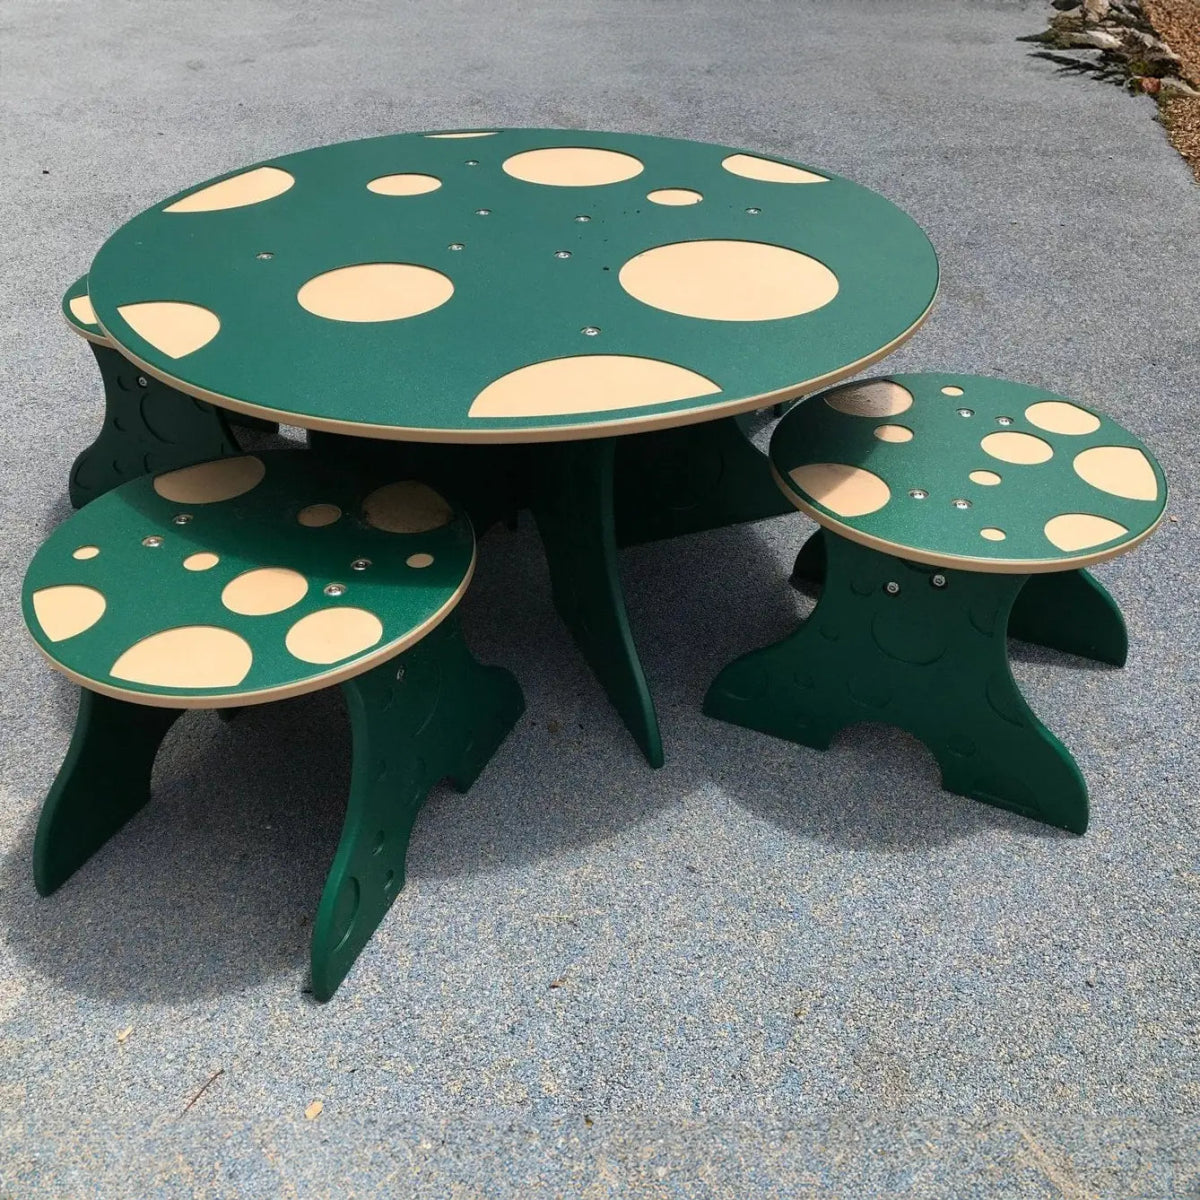 Toddler Mushroom Table & Chairs - Playtopia, Inc.